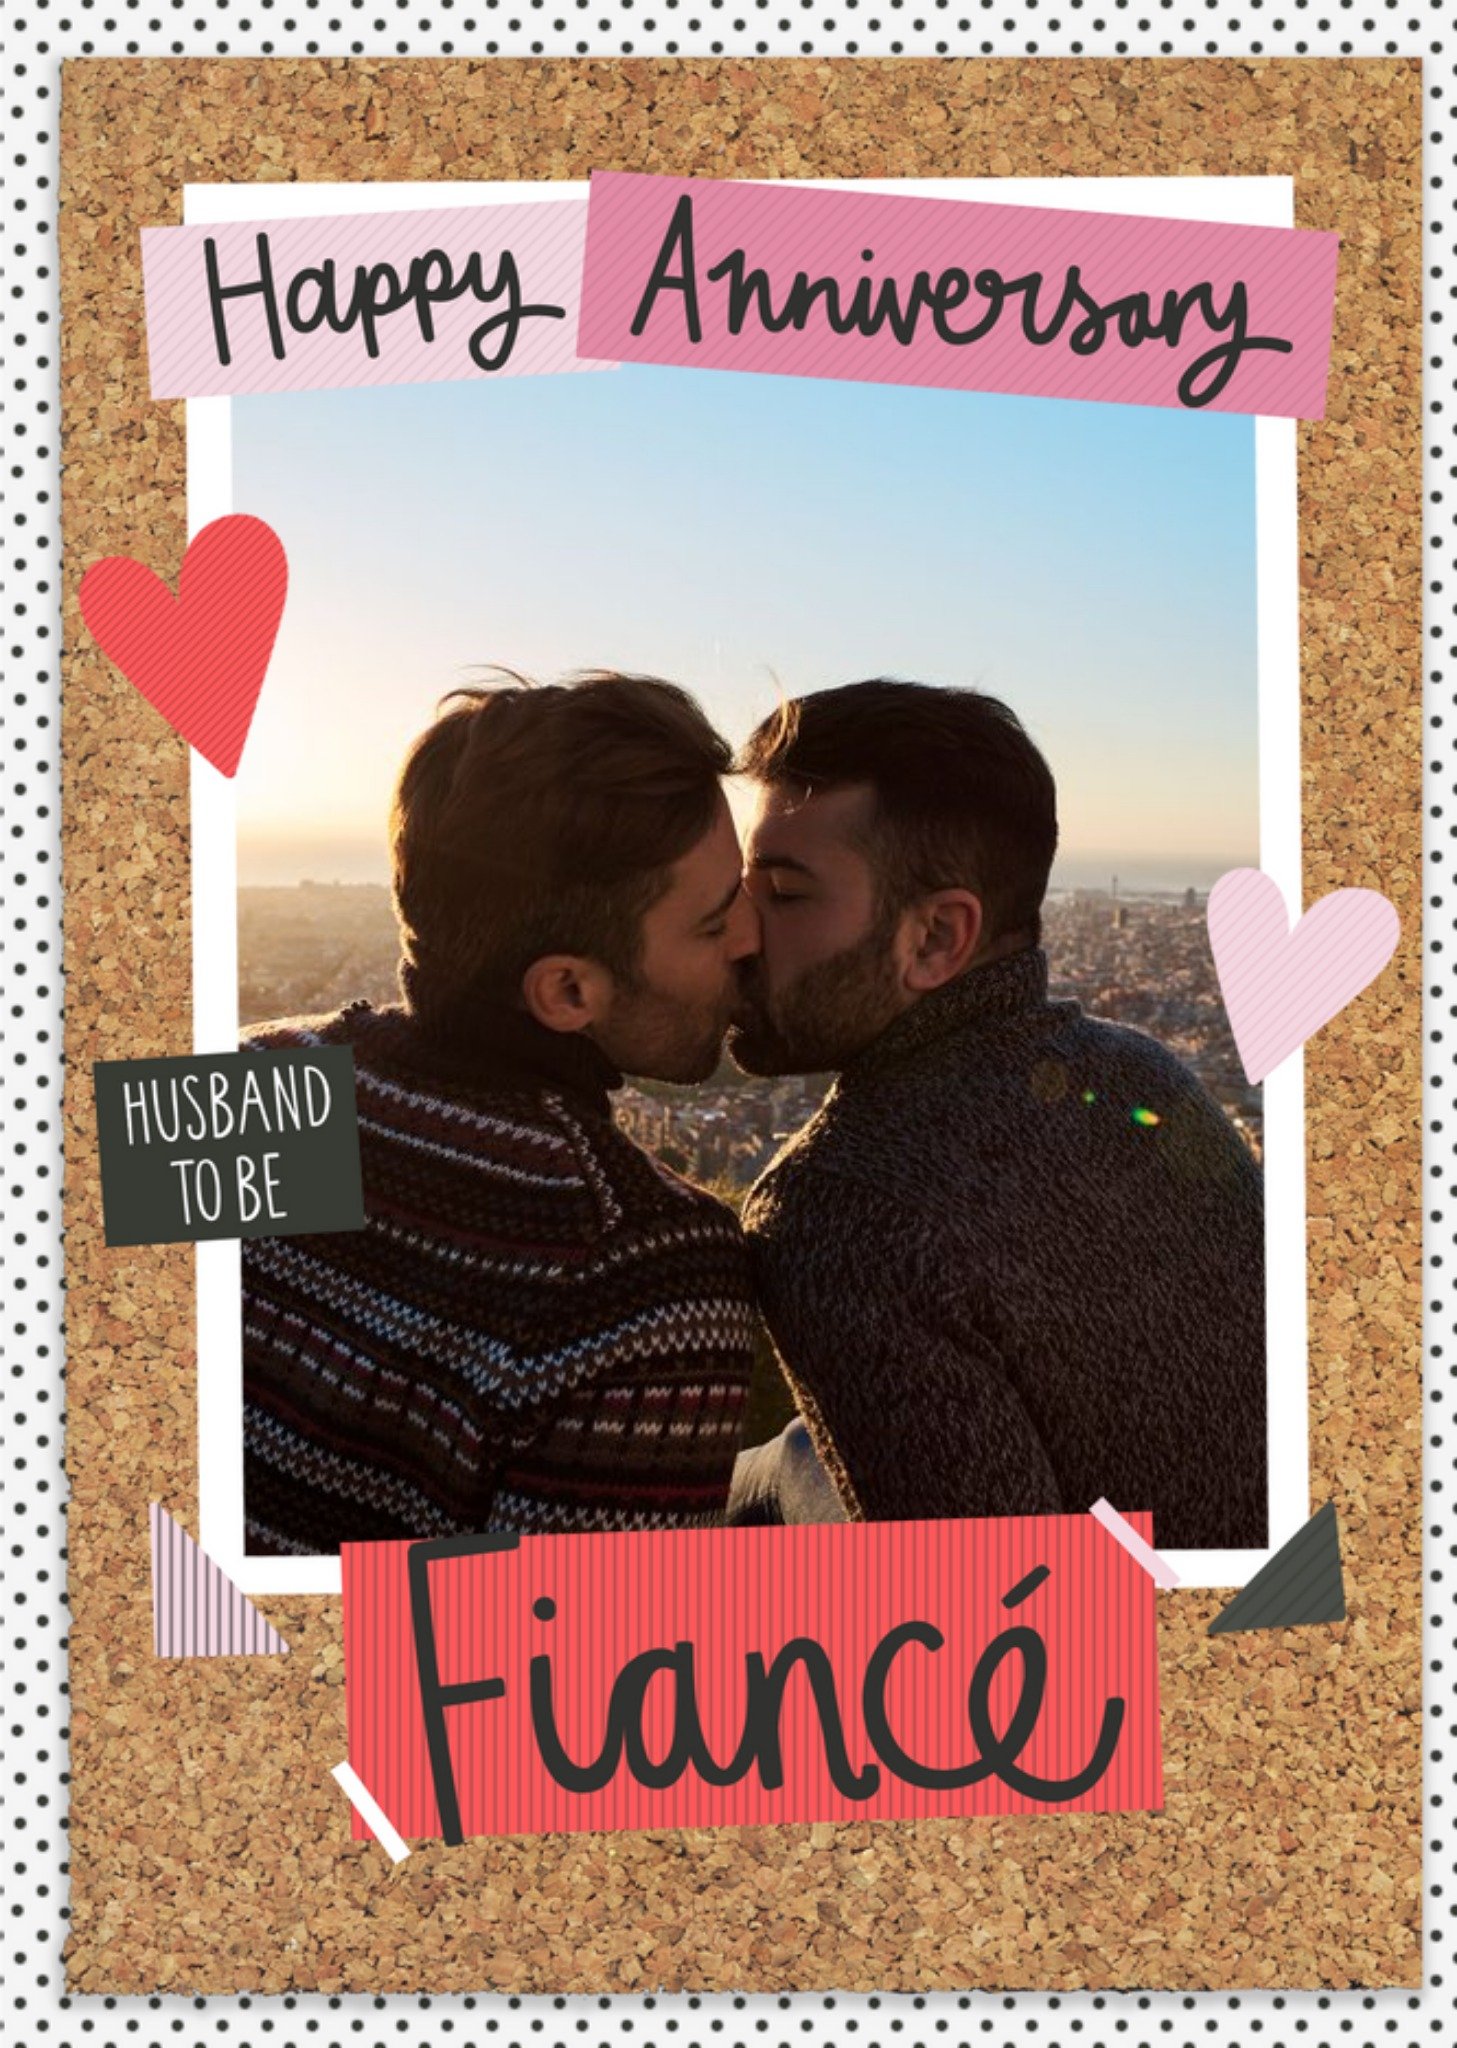 Moonpig Anniversary Card - Husband To Be - Fiance - Photo Upload Ecard